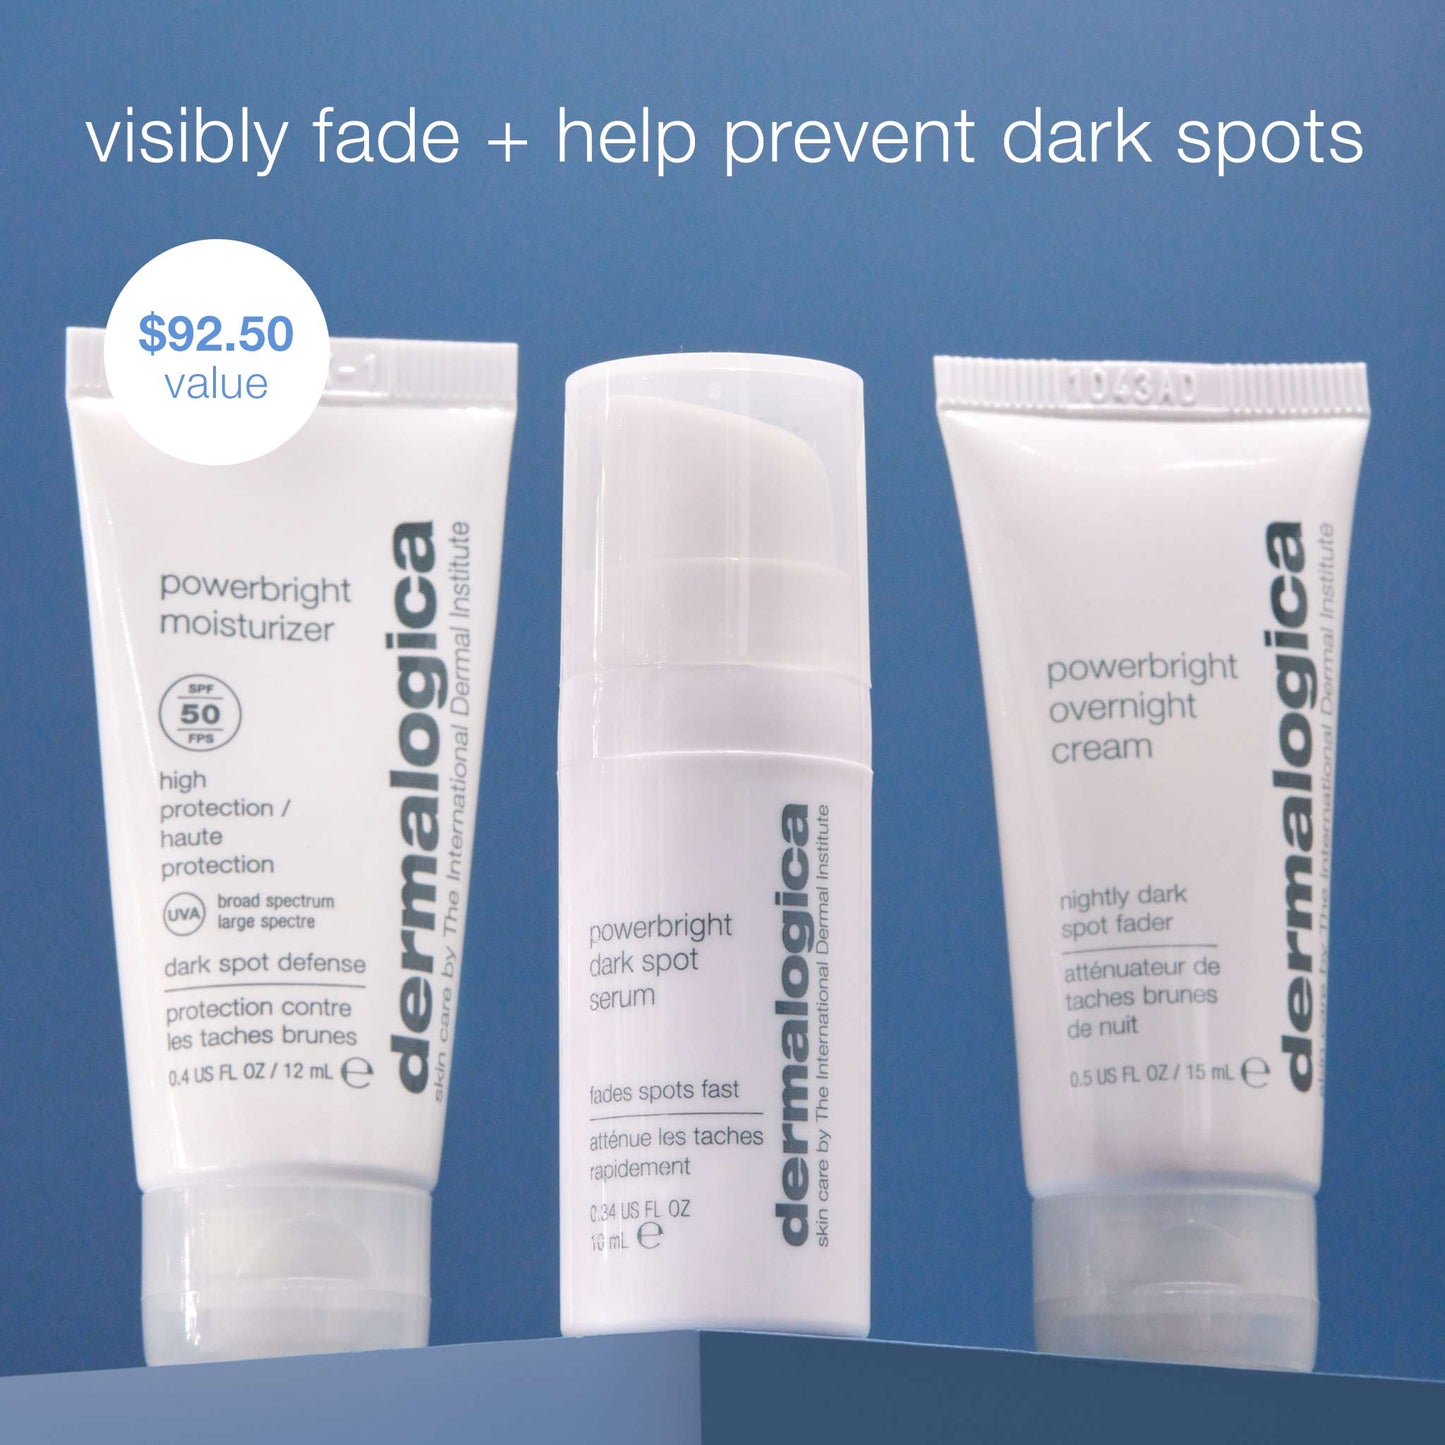 visibly fade + help prevent dark spots $92.50 value